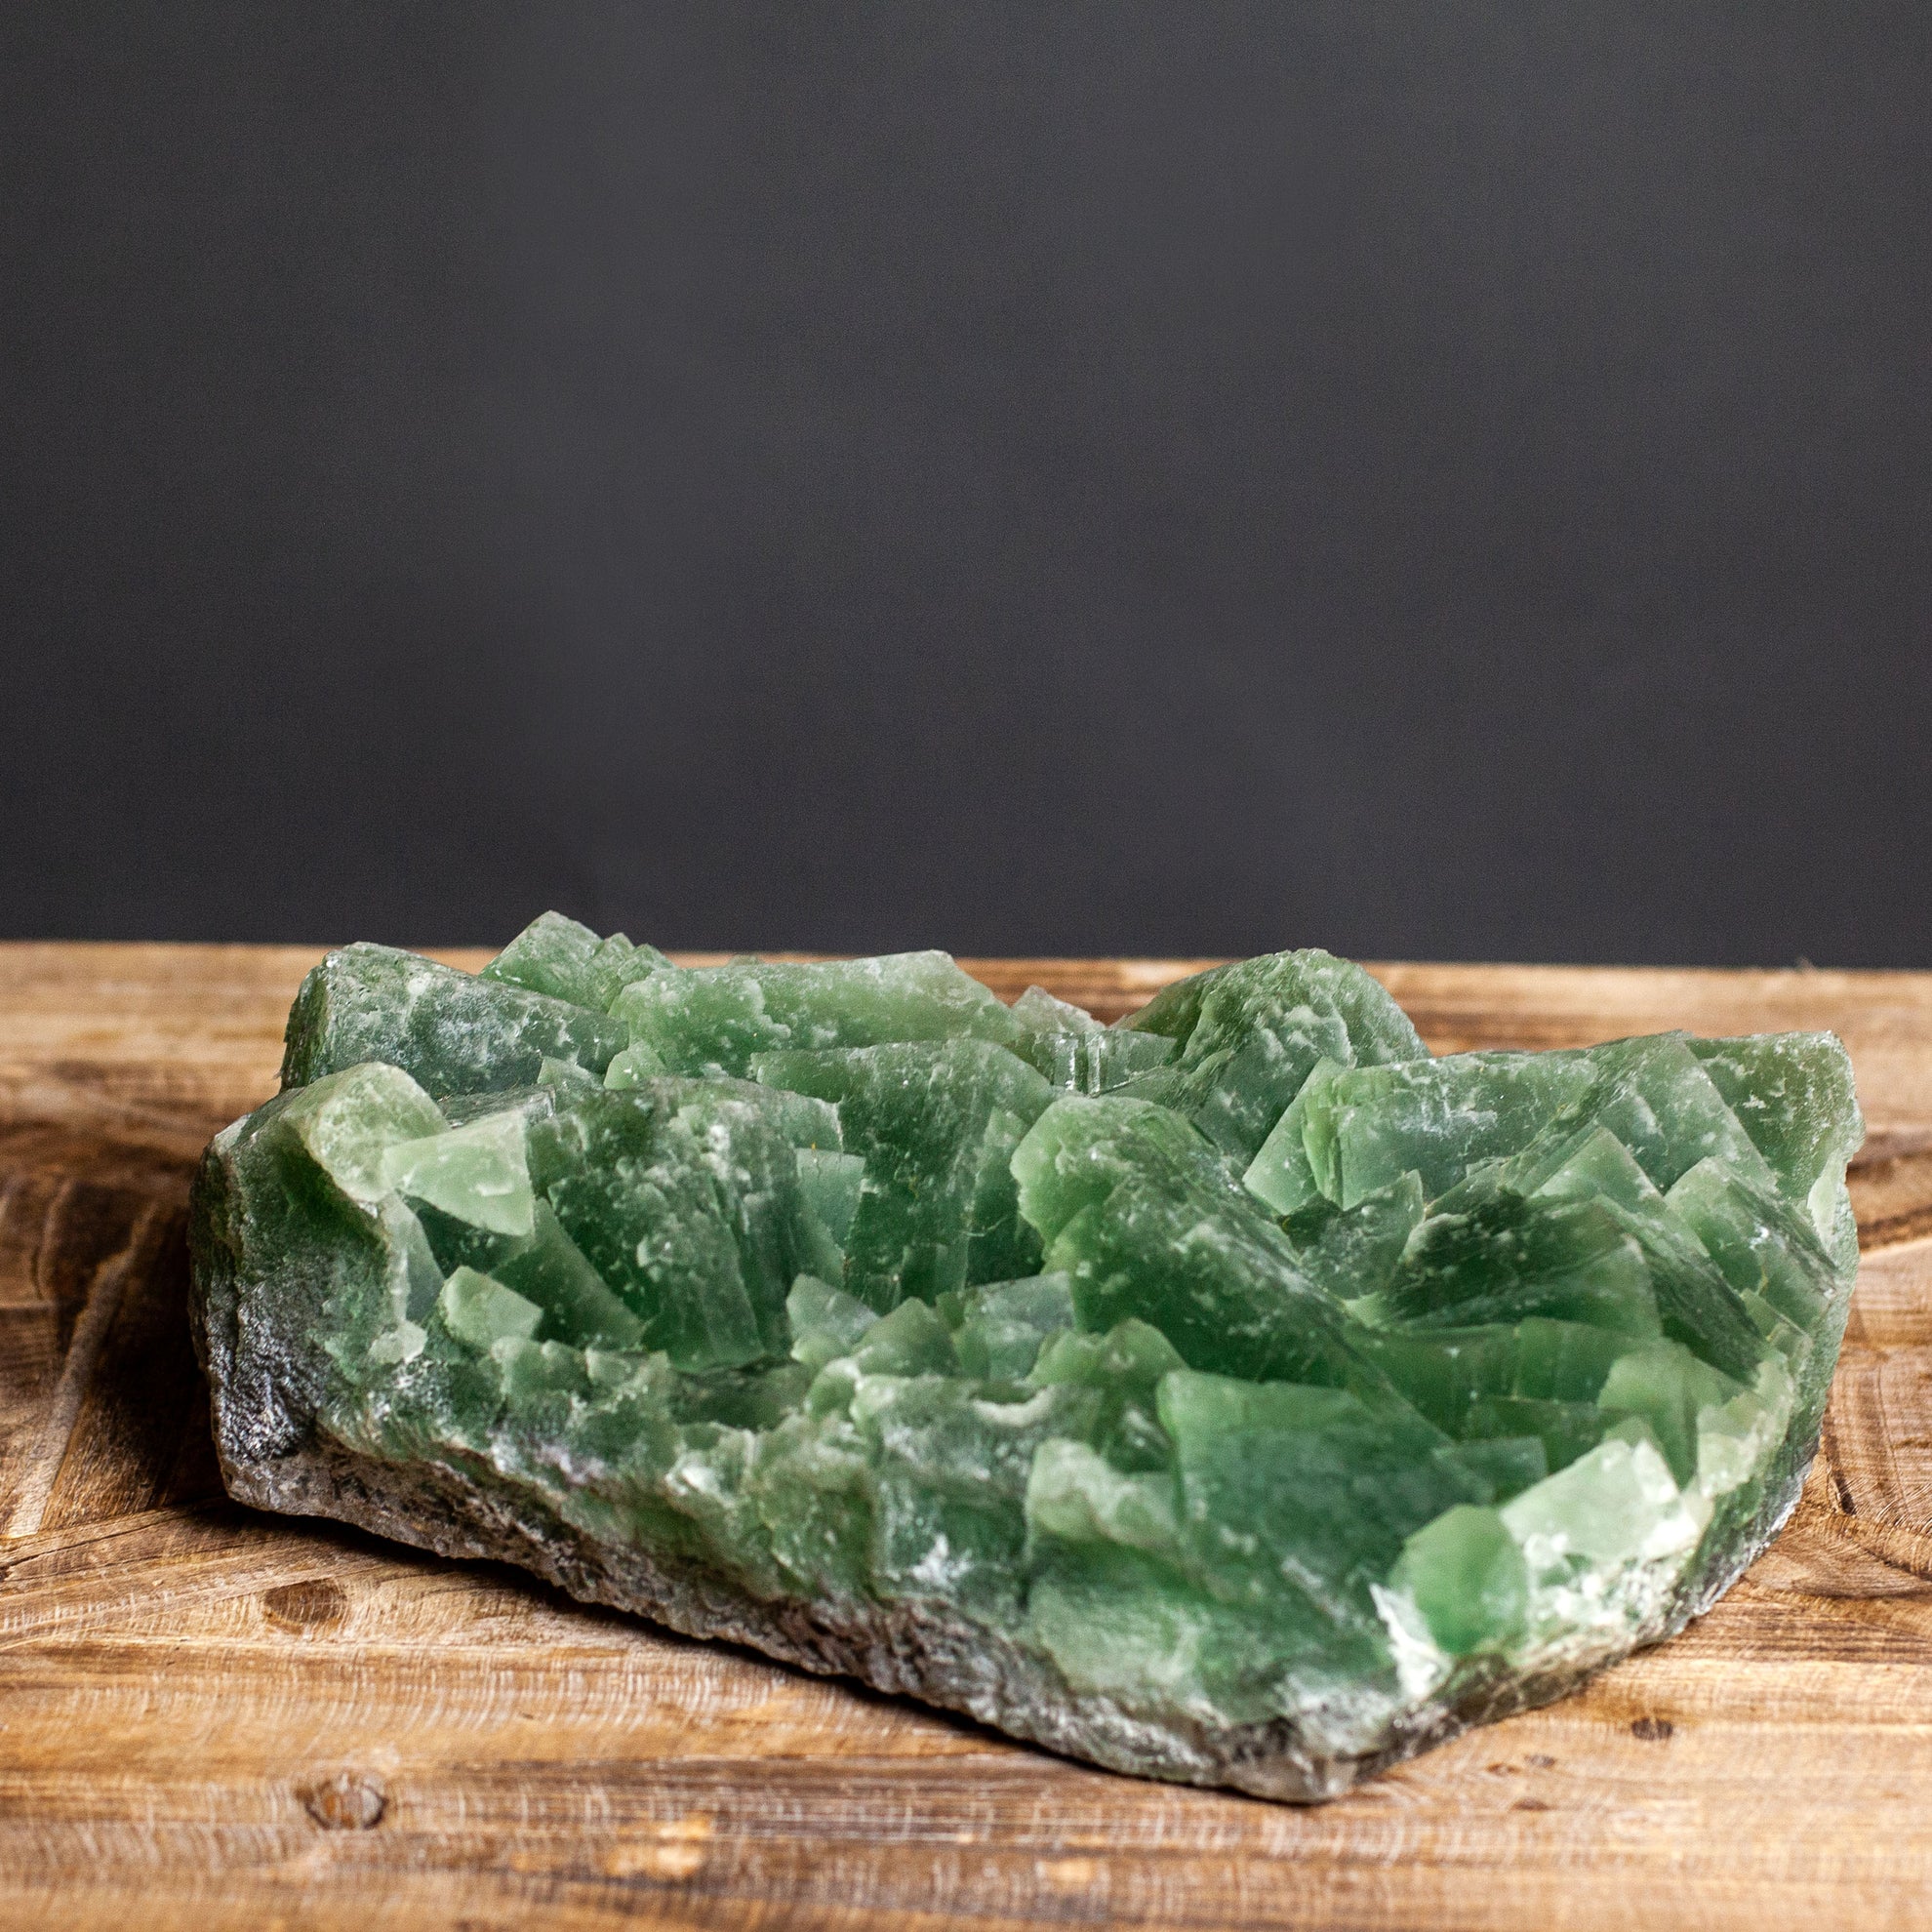 Green Fluorite Crystal